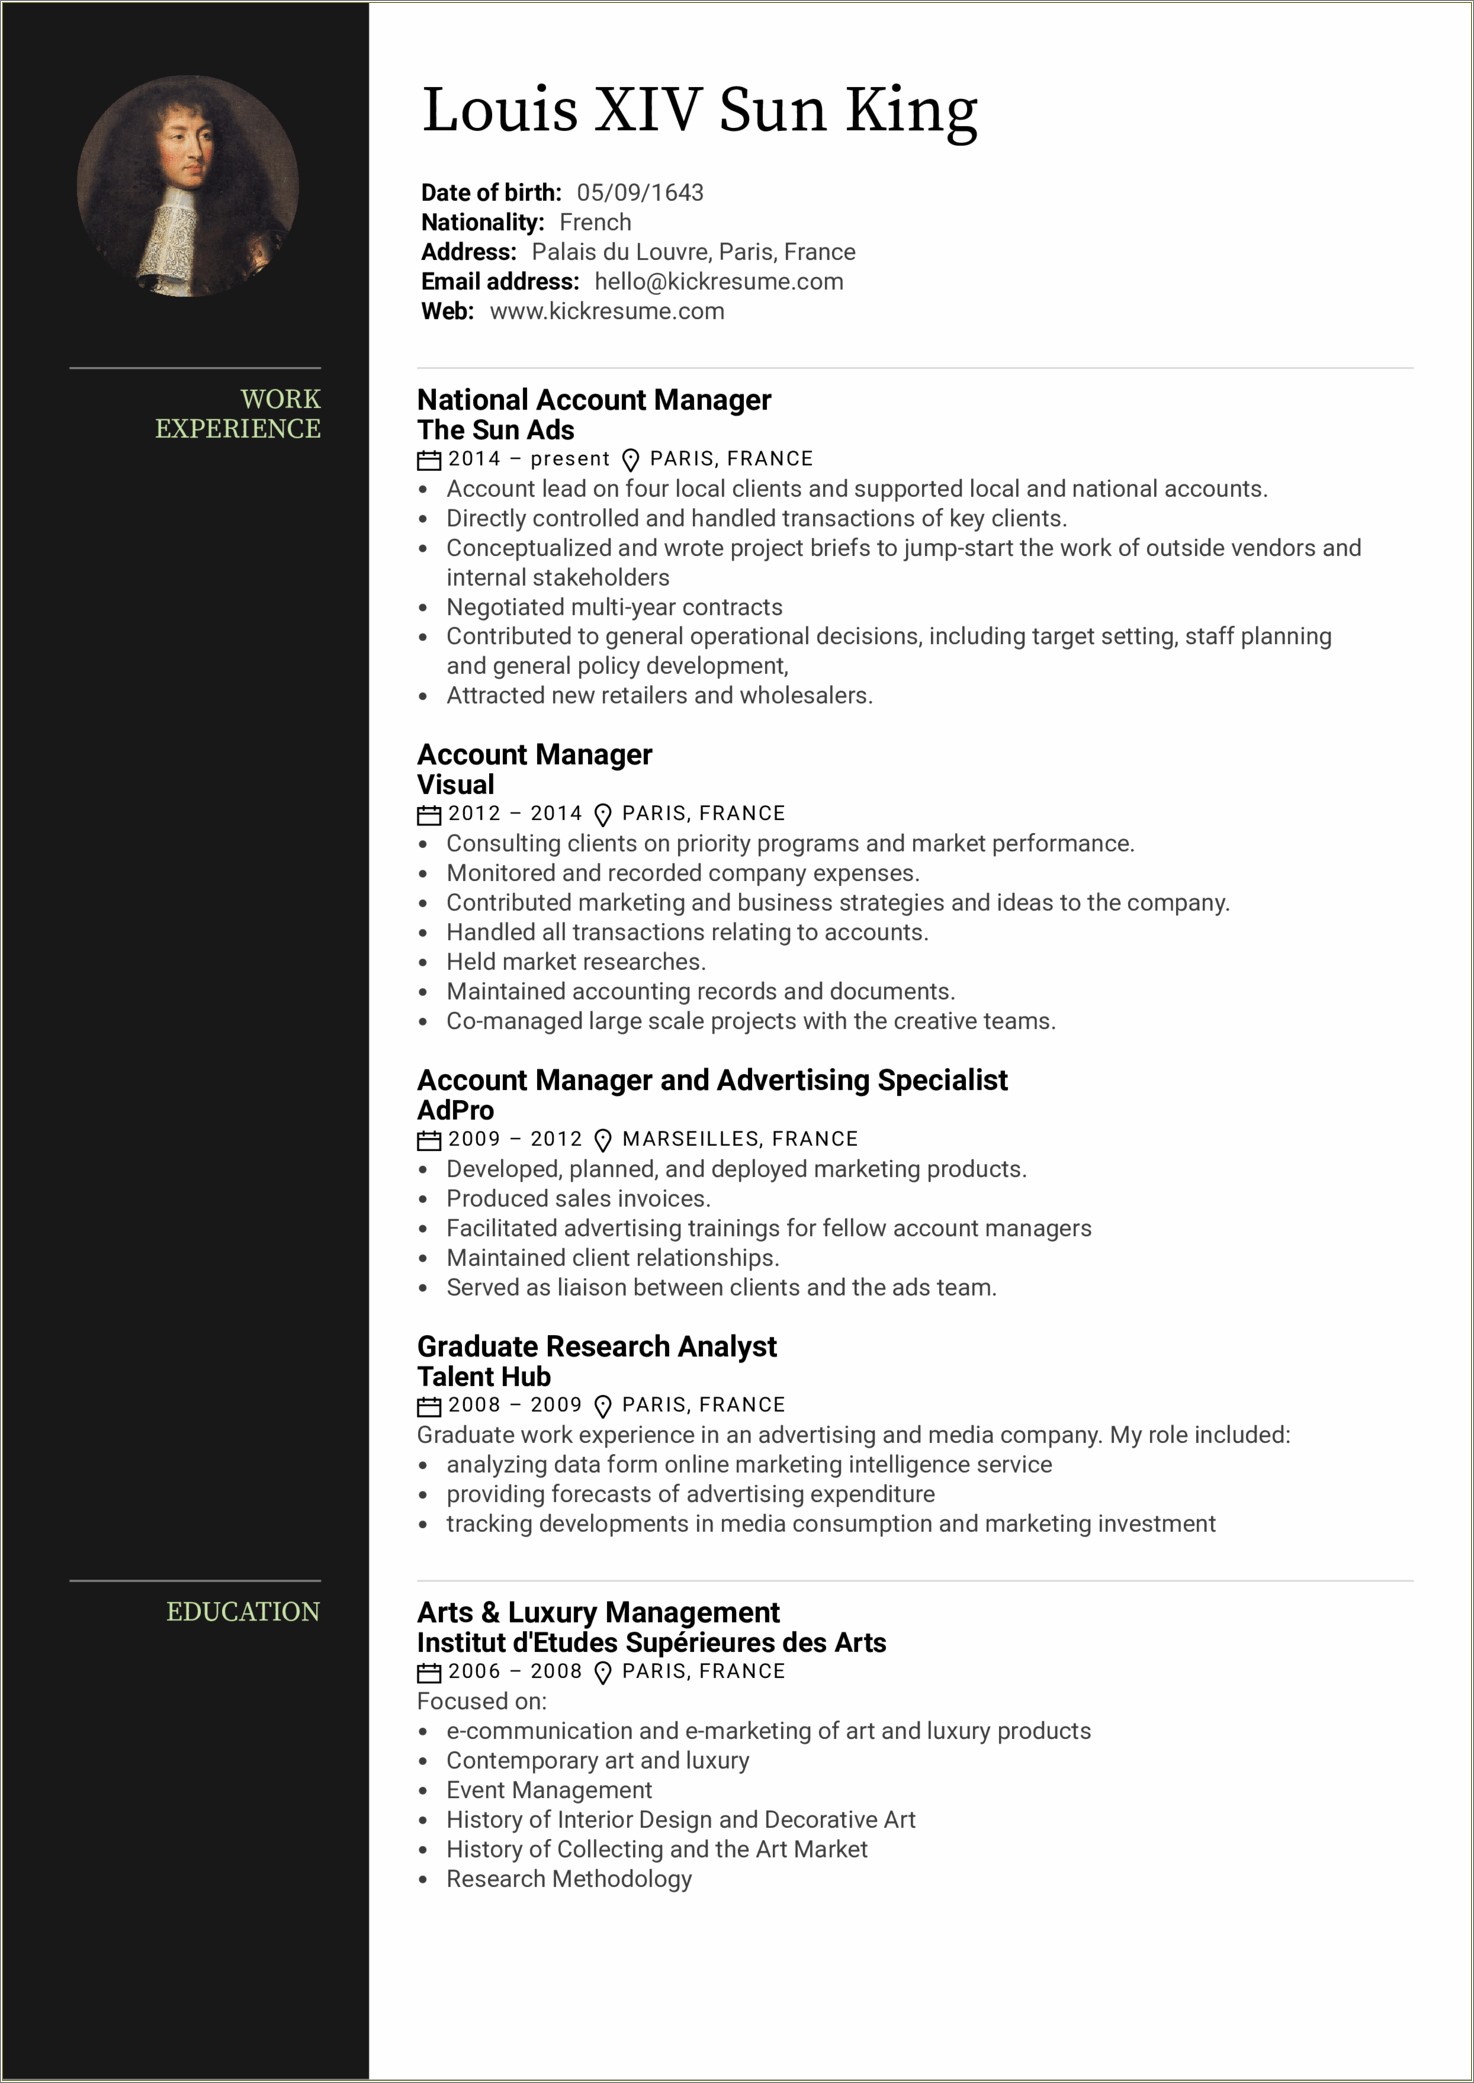 Resume With Marketing Asset Management